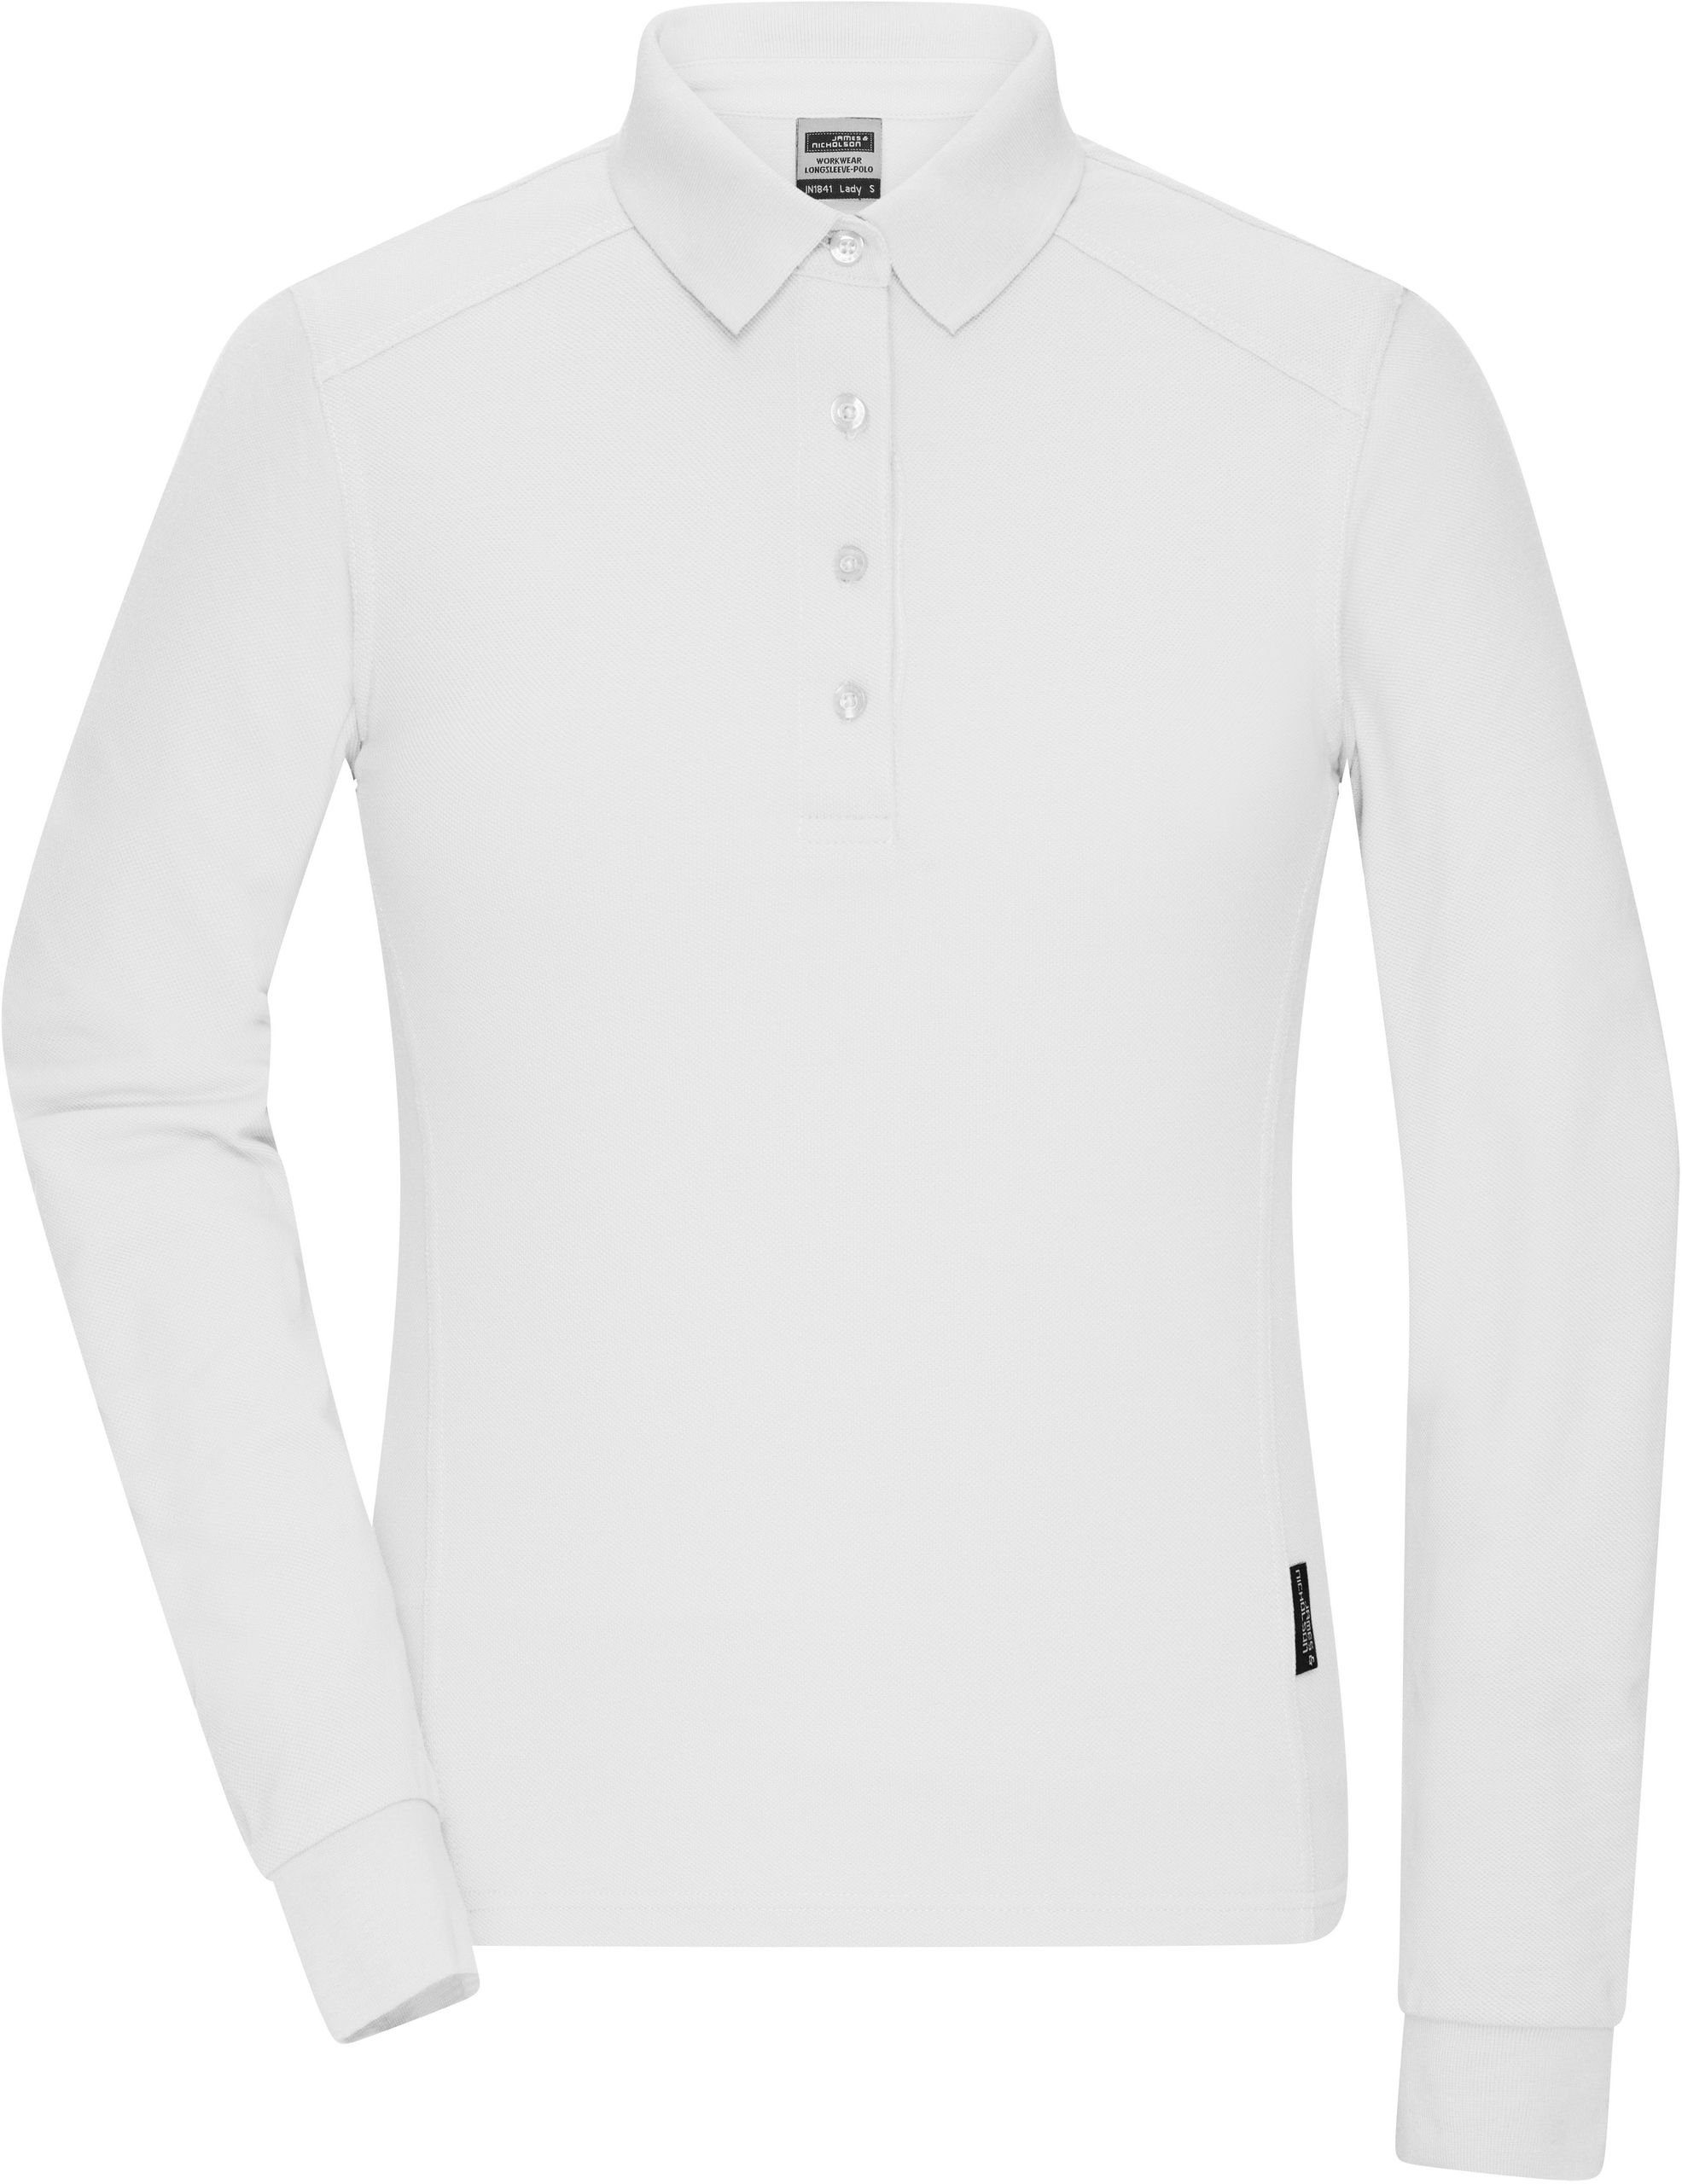 James & Nicholson Poloshirt Damen Workwear Polo langarm White